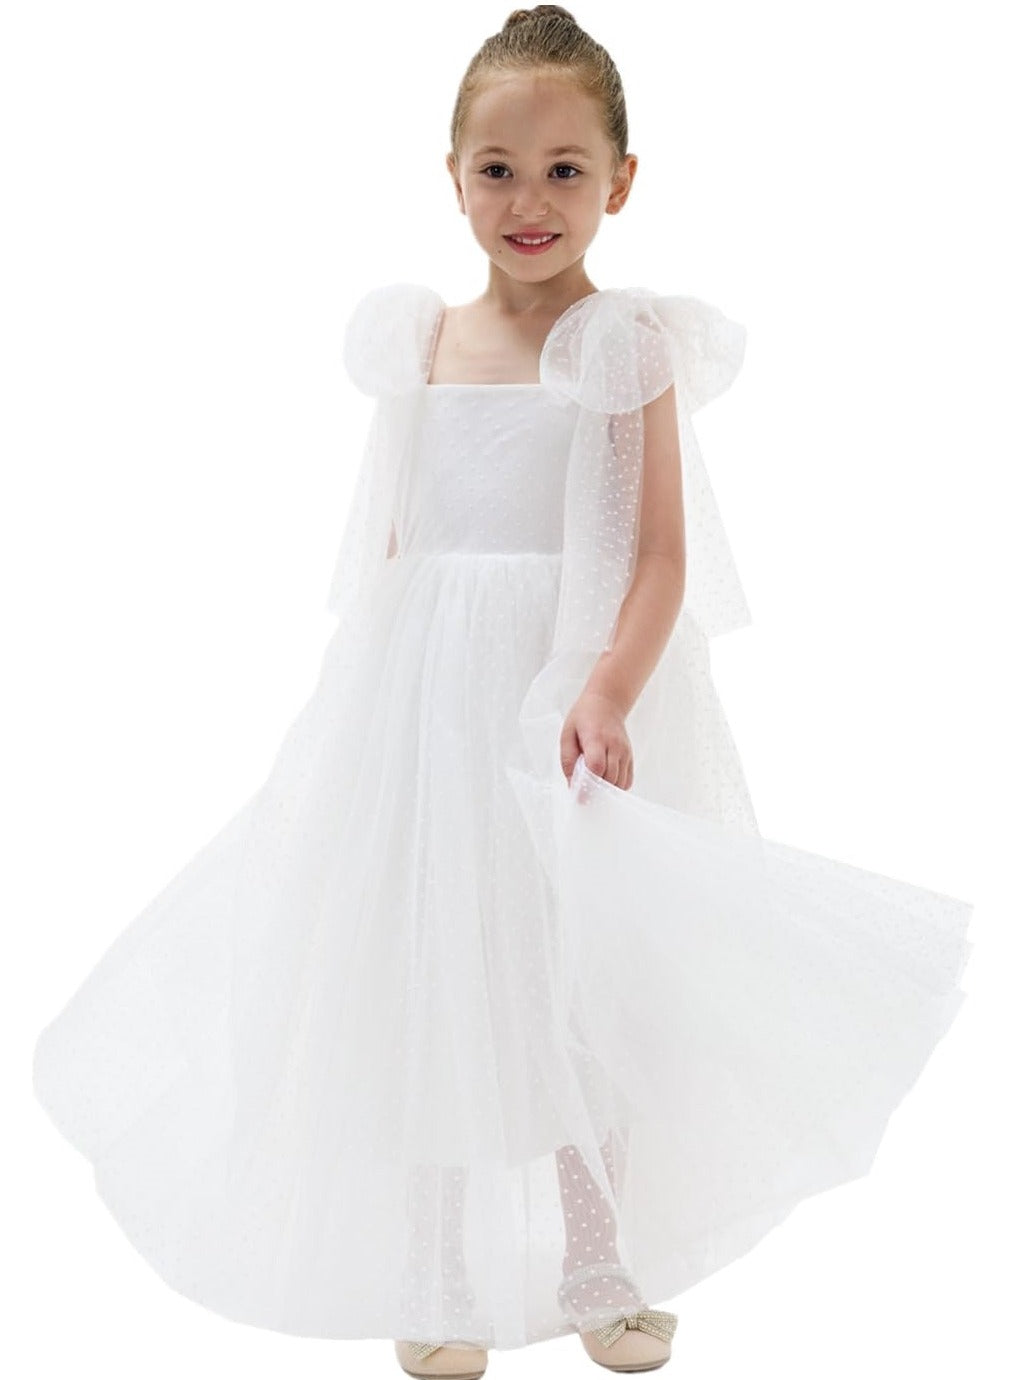 Lily Adjustable Strap Girl Dress in Polka Dot White